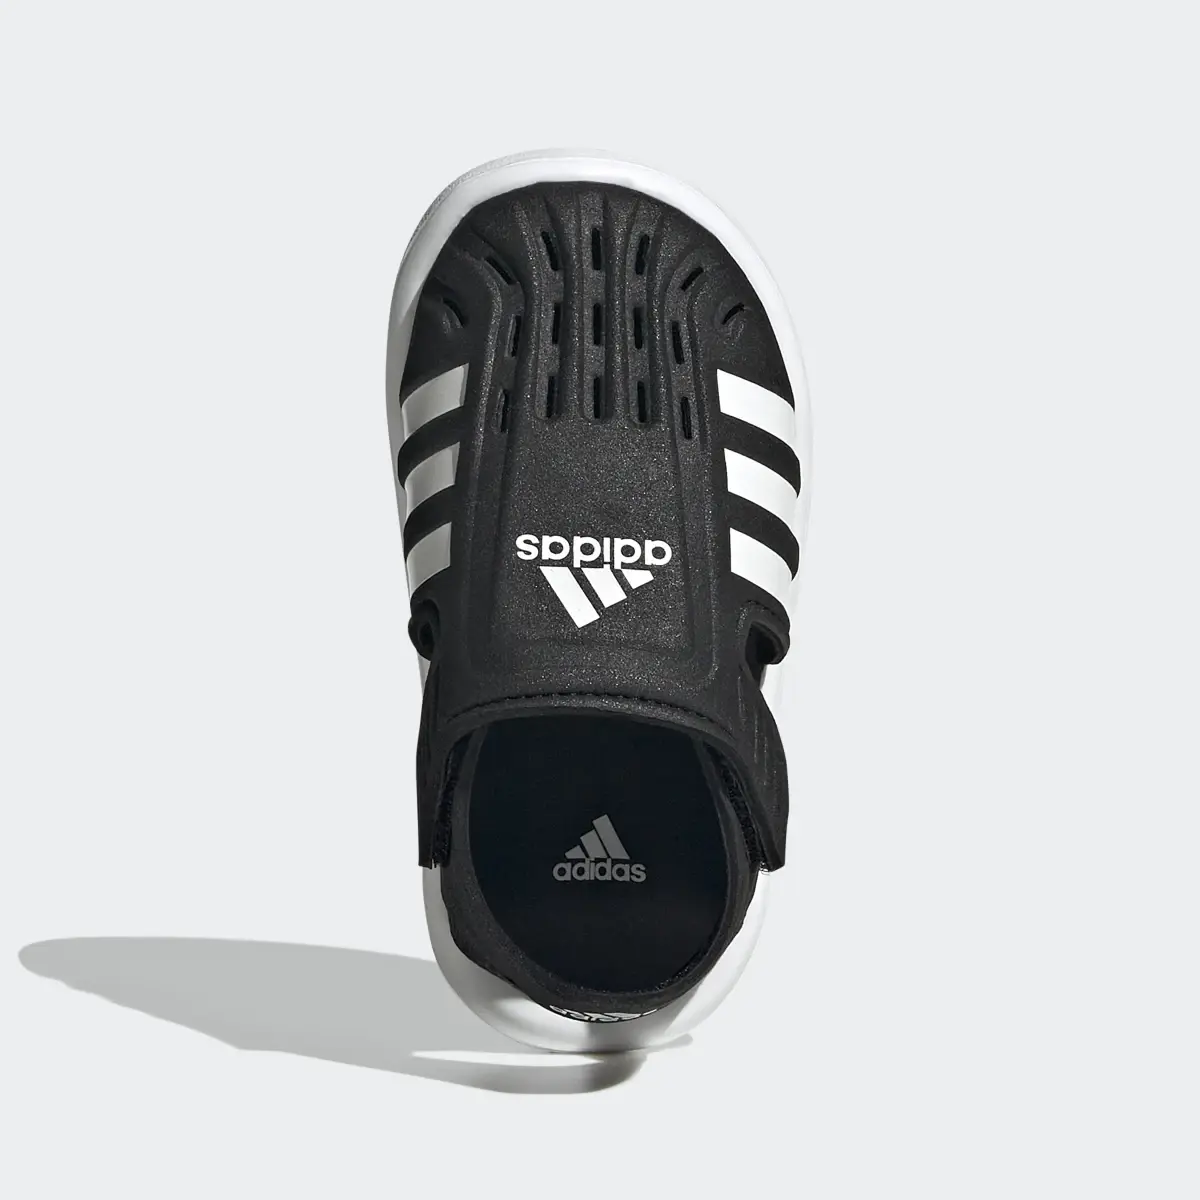 Adidas Closed-Toe Summer Water Sandals. 3